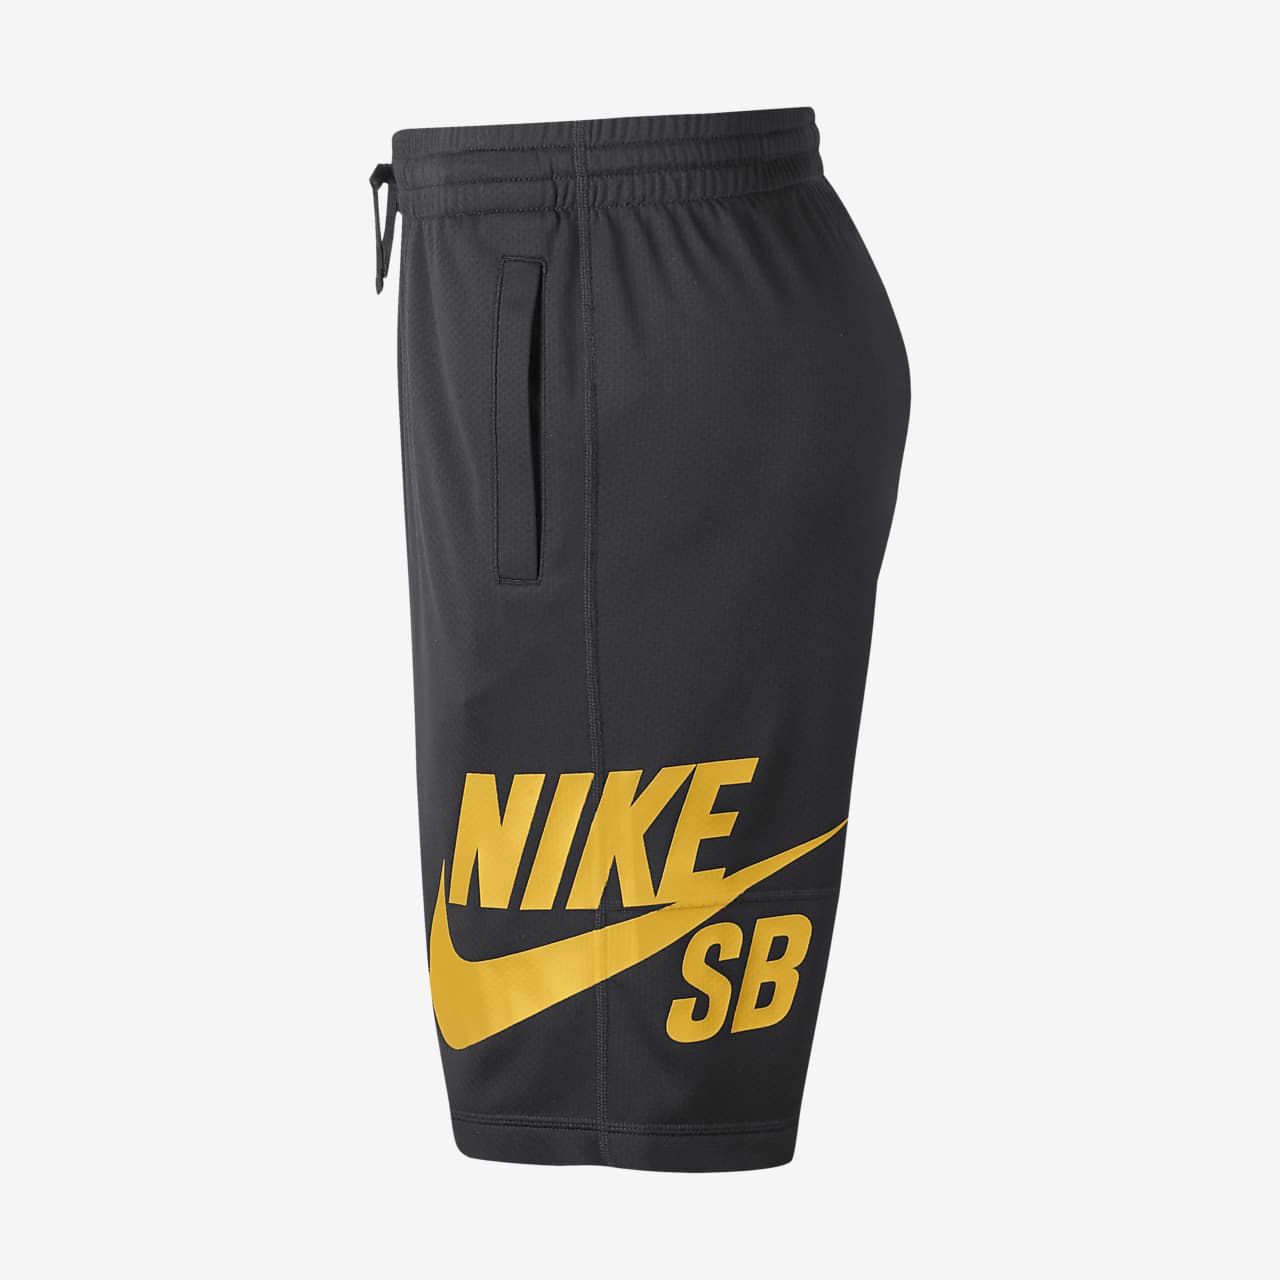 nike sb basketball shorts